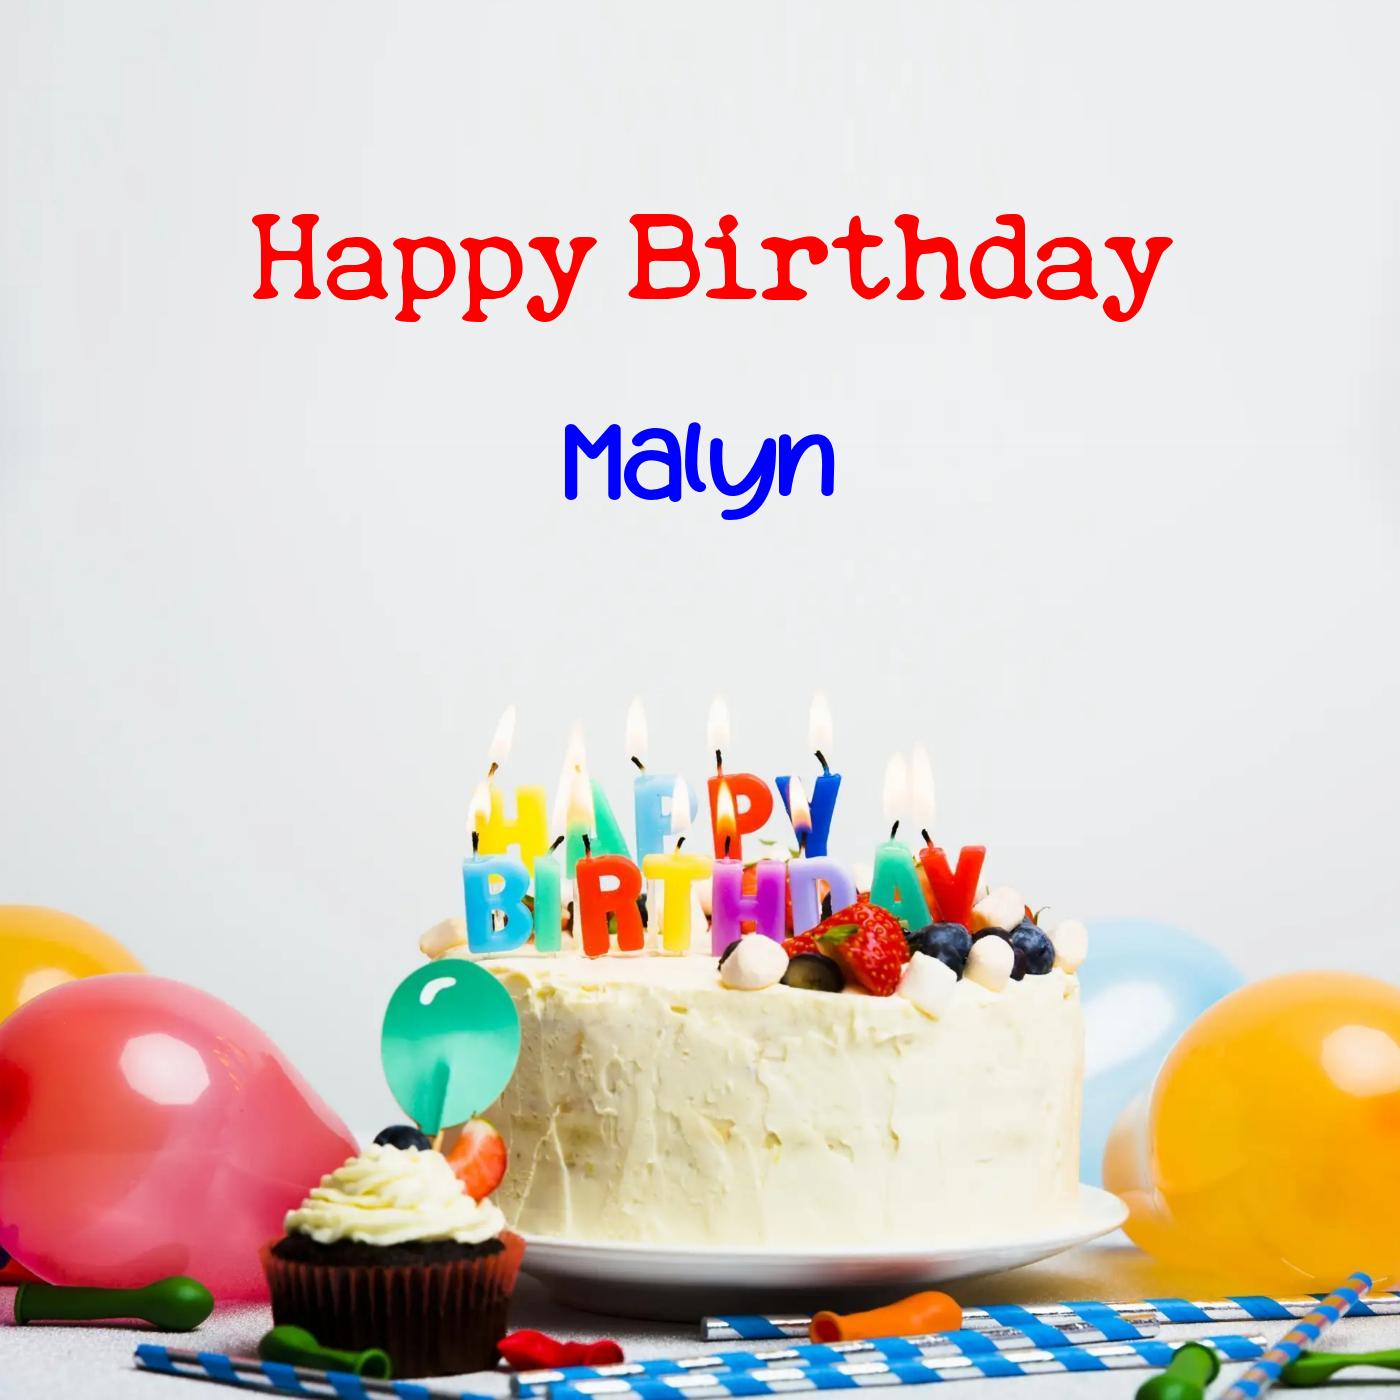 Happy Birthday Malyn Cake Balloons Card